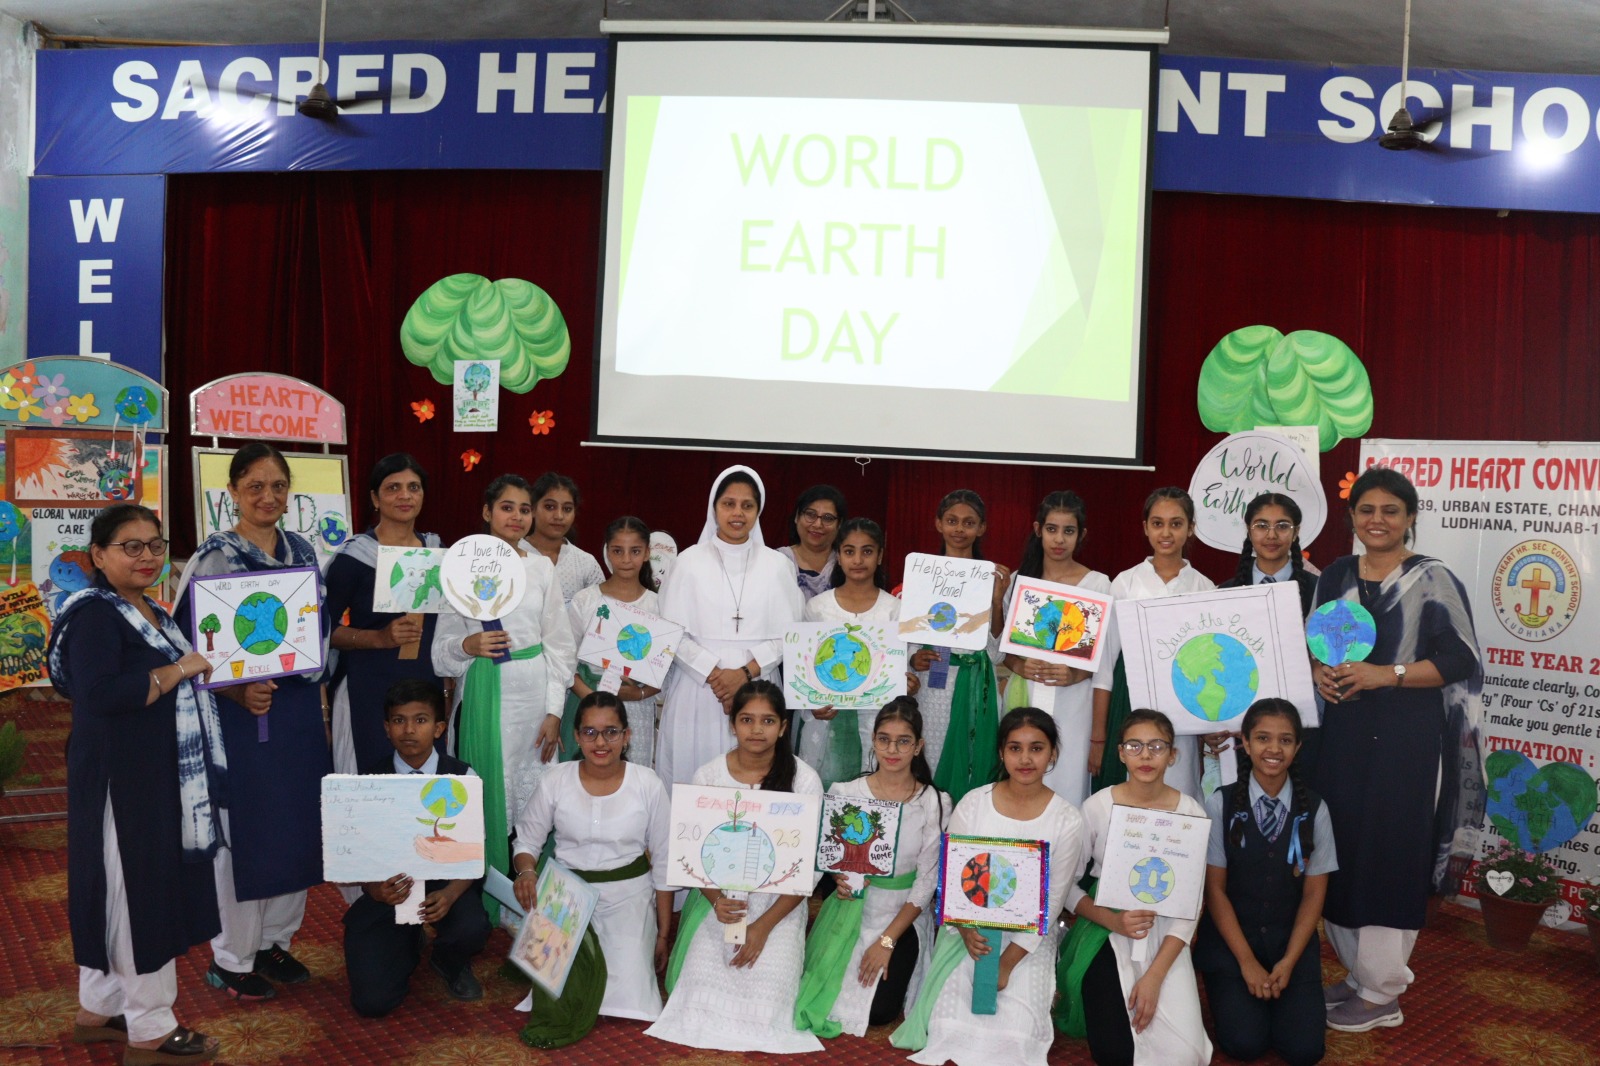 World Earth Day Celebration